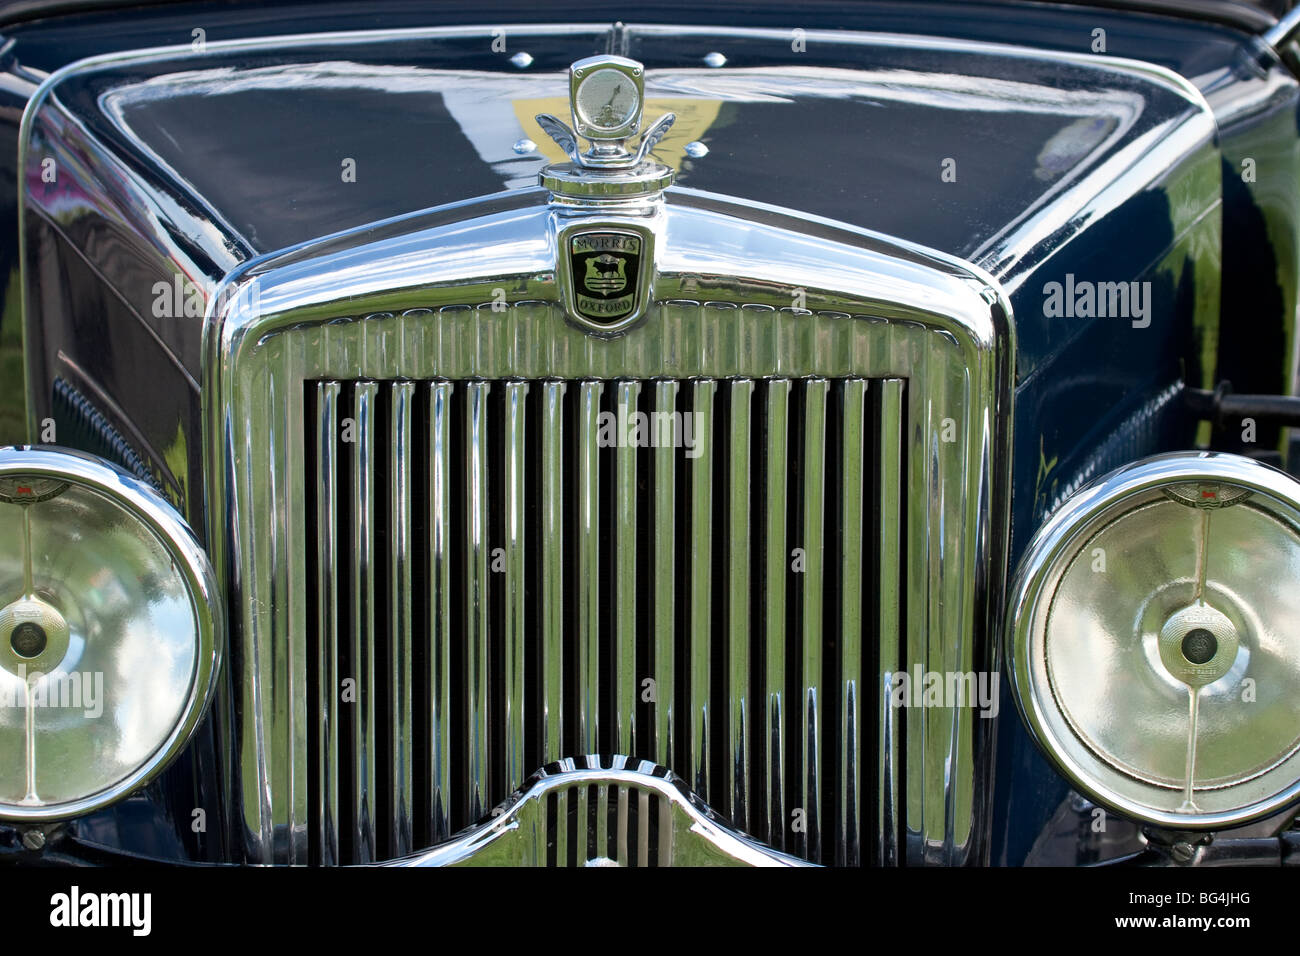 Morris Oxford vintage car, England, UK Stock Photo